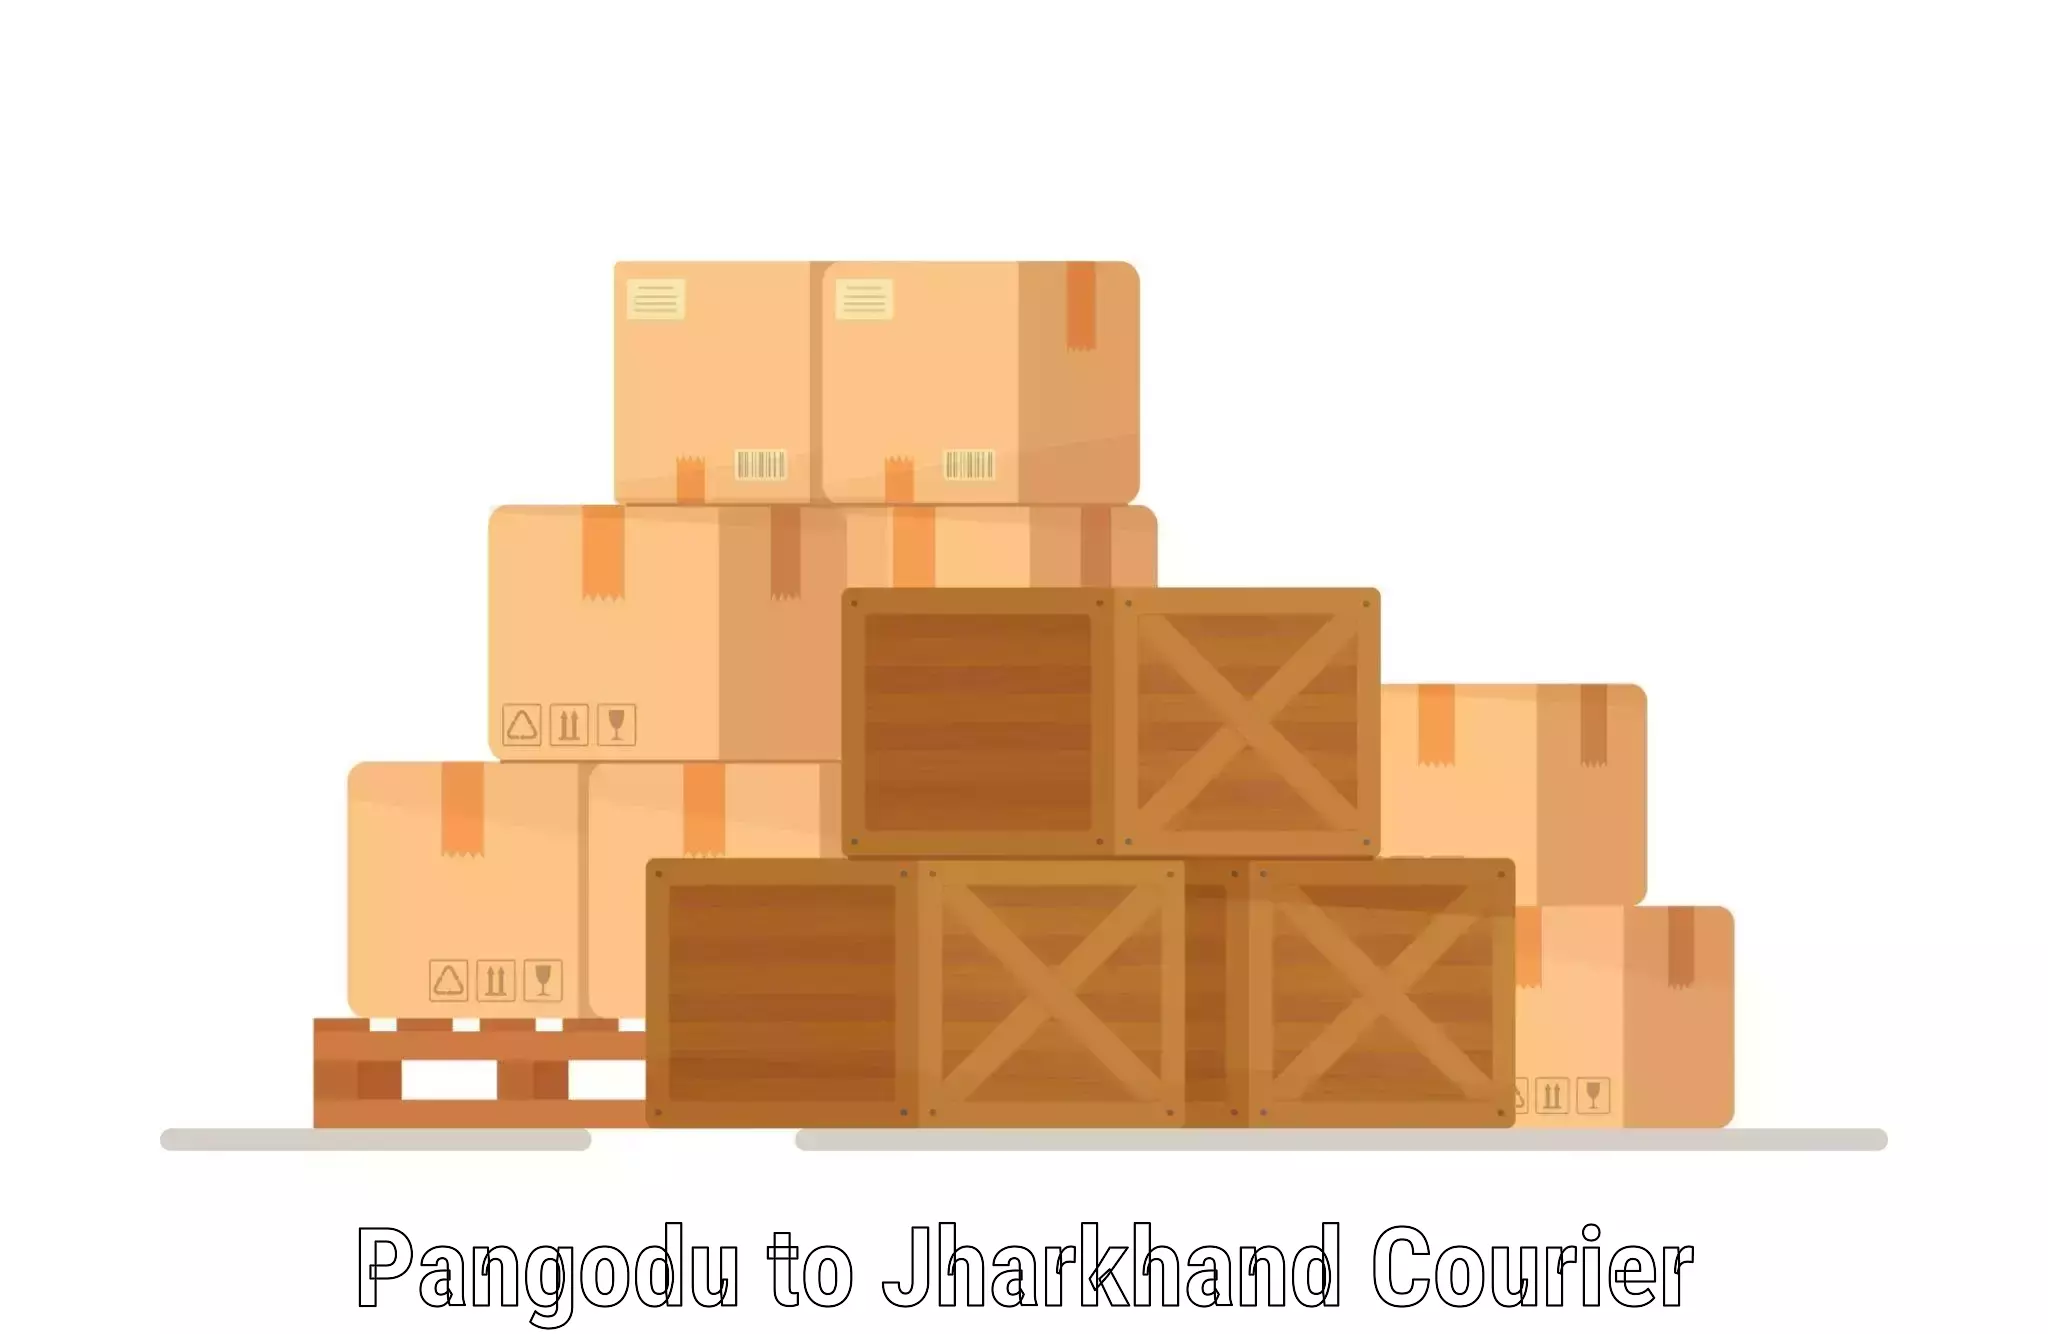 Courier service innovation Pangodu to Jamshedpur